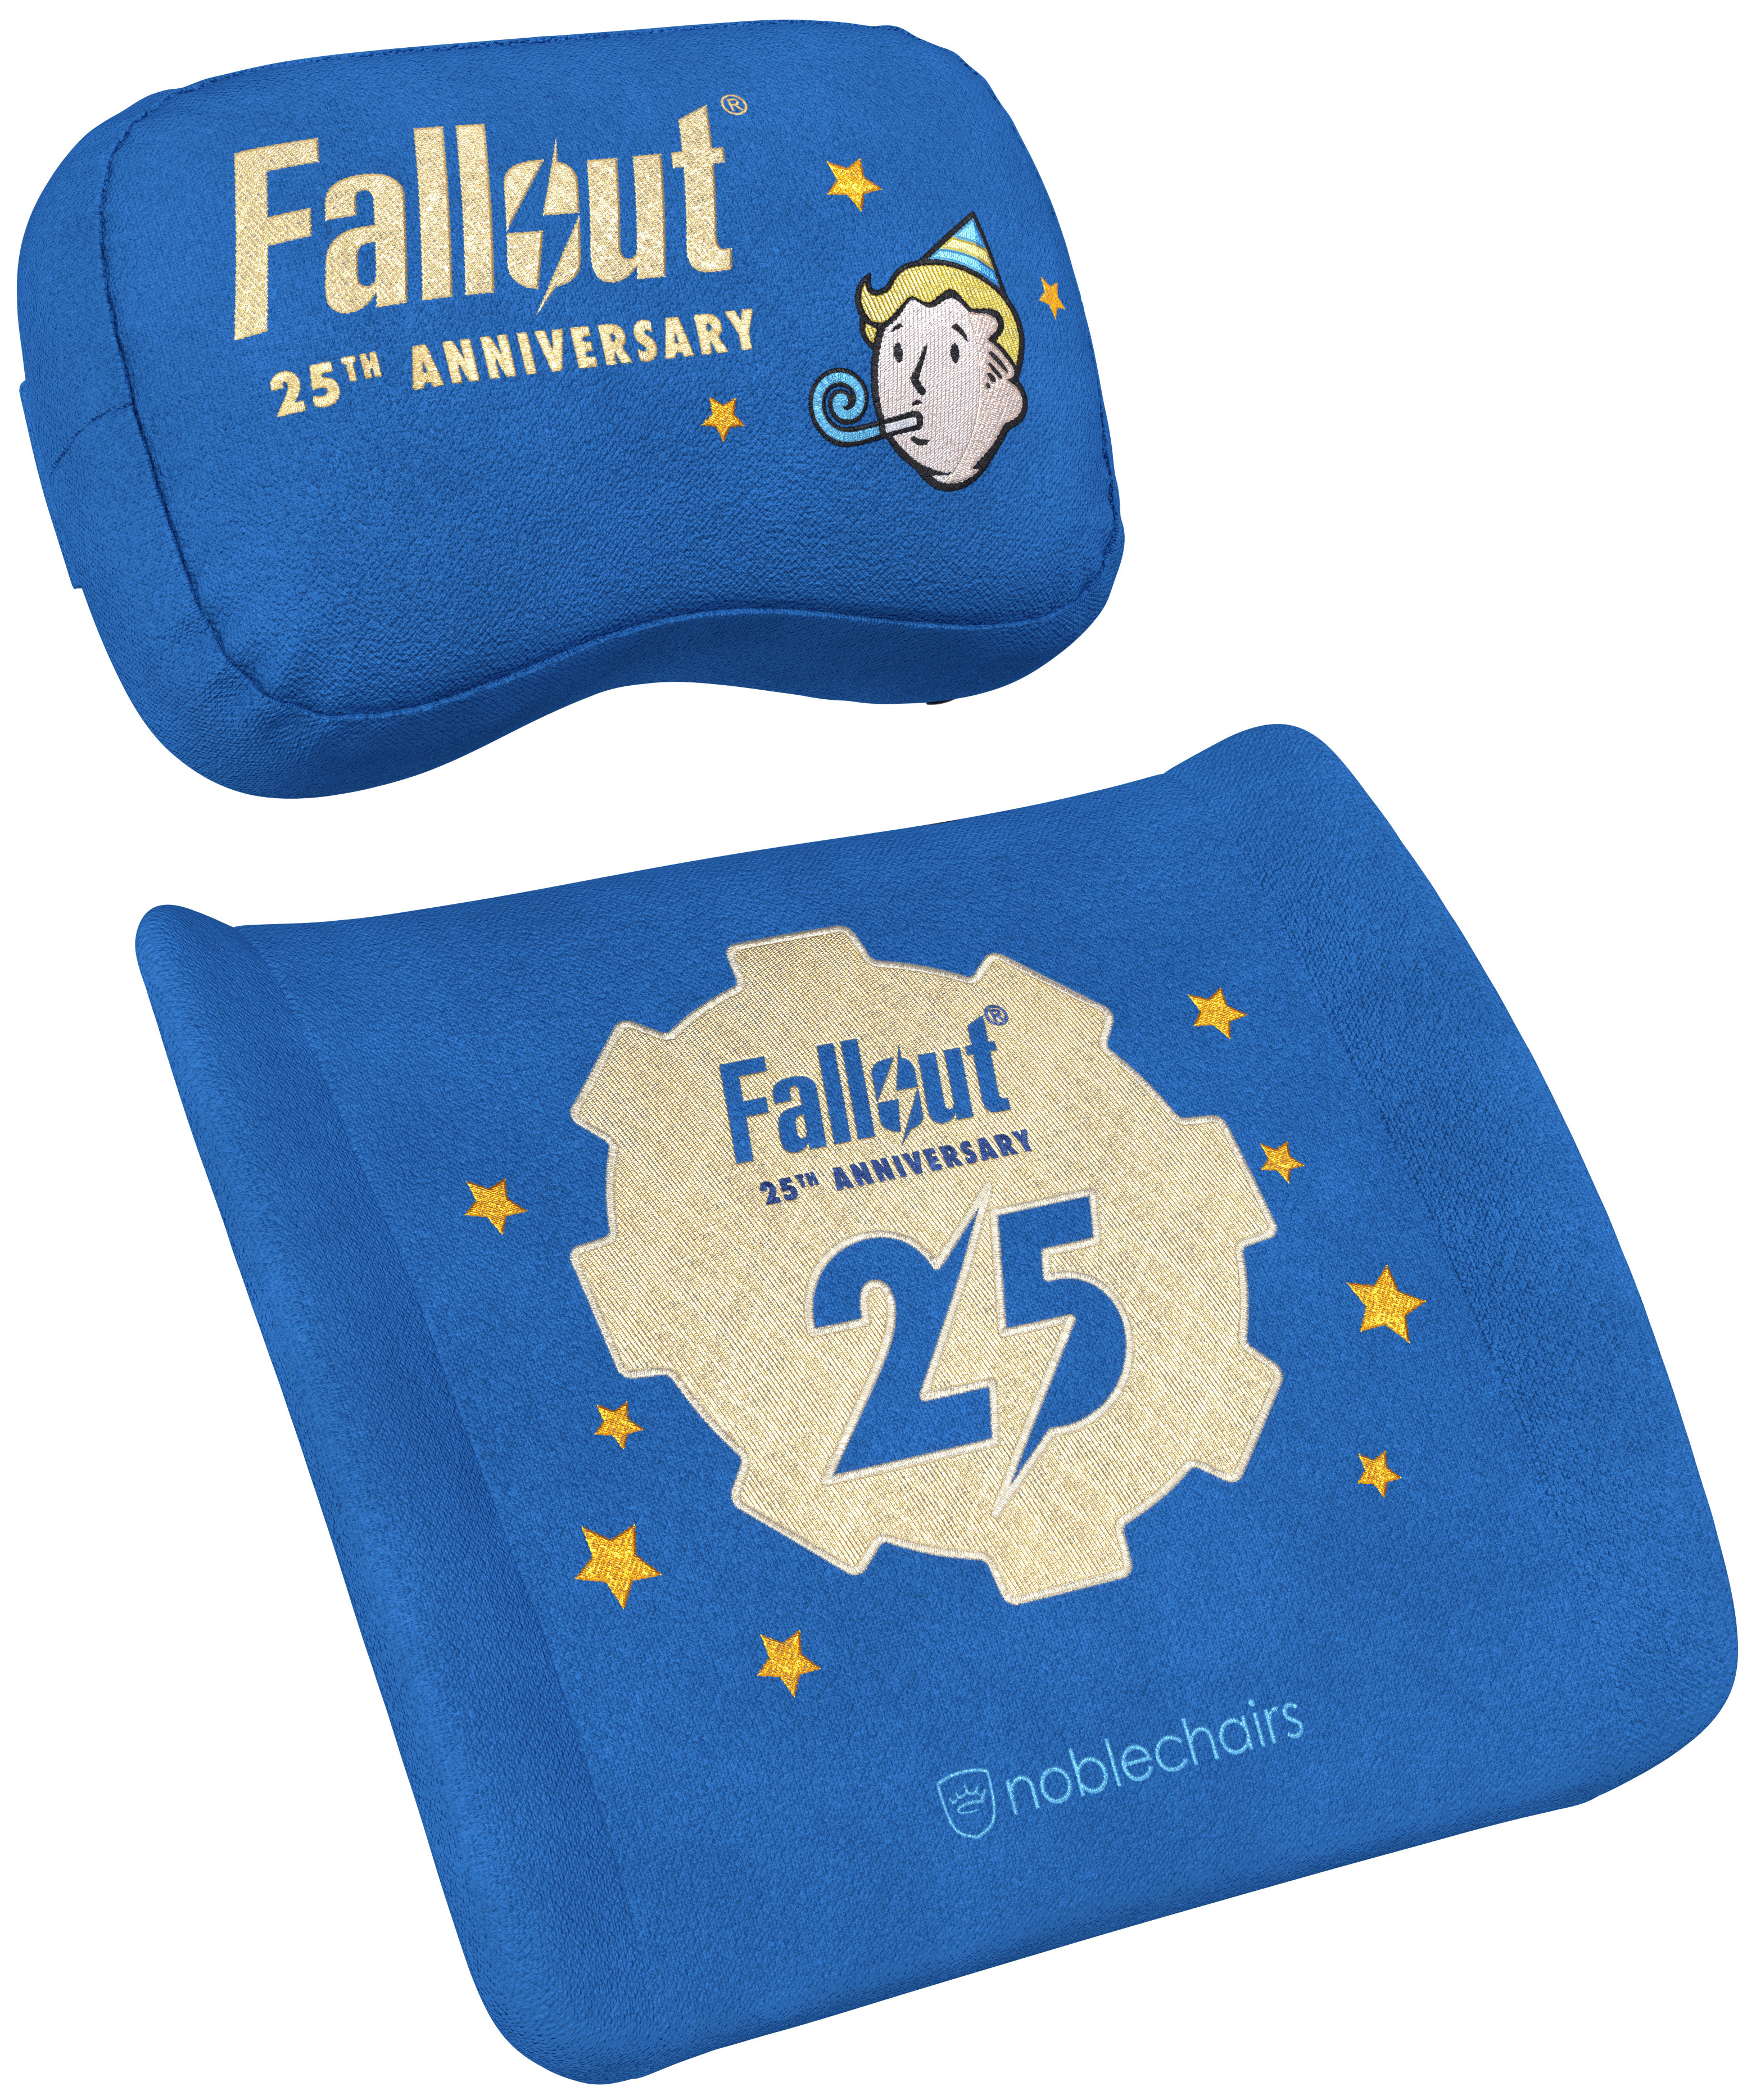 noblechairs - Juego de Almohadas noblechairs Memory Foam - Fallout 25th Anniversary Edition